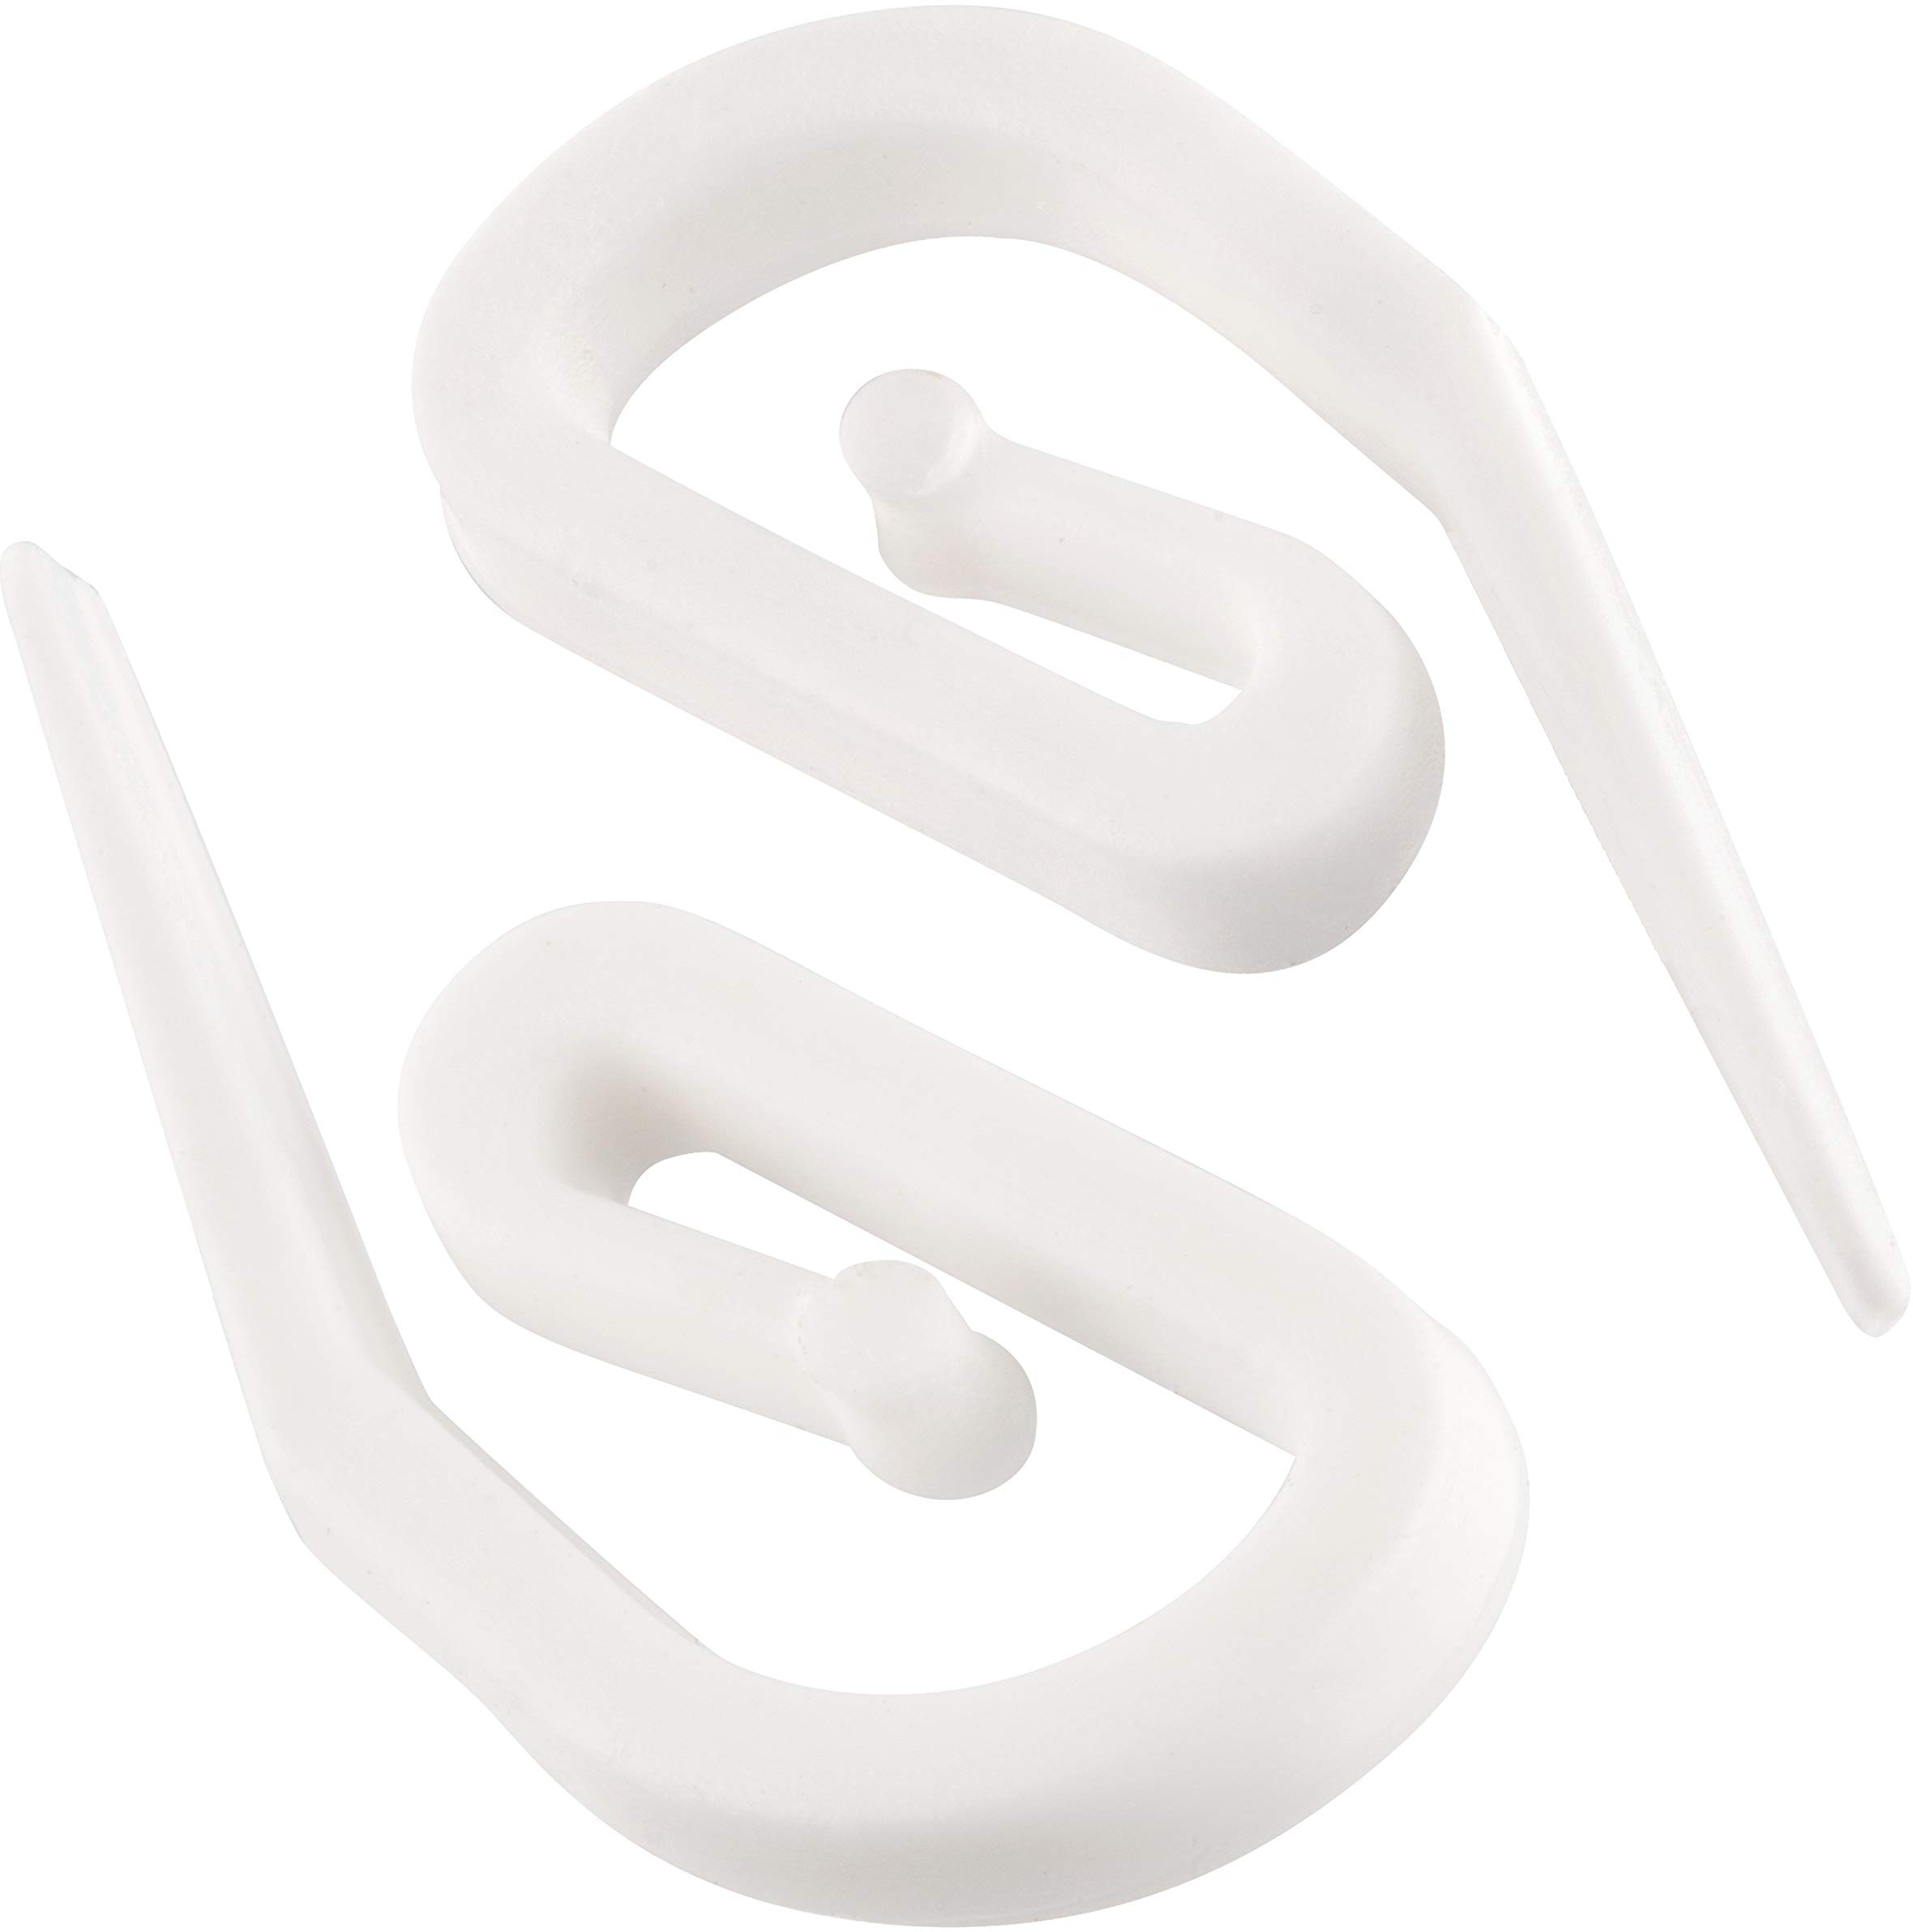 Bead Shop Weiß Kunststoff Vorhang Haken – 100 Stück (27,5 x 10,8 mm)/Vorhängen Gardinen/Bleistiftfalten/Tape Top/Dusche Vorhang,